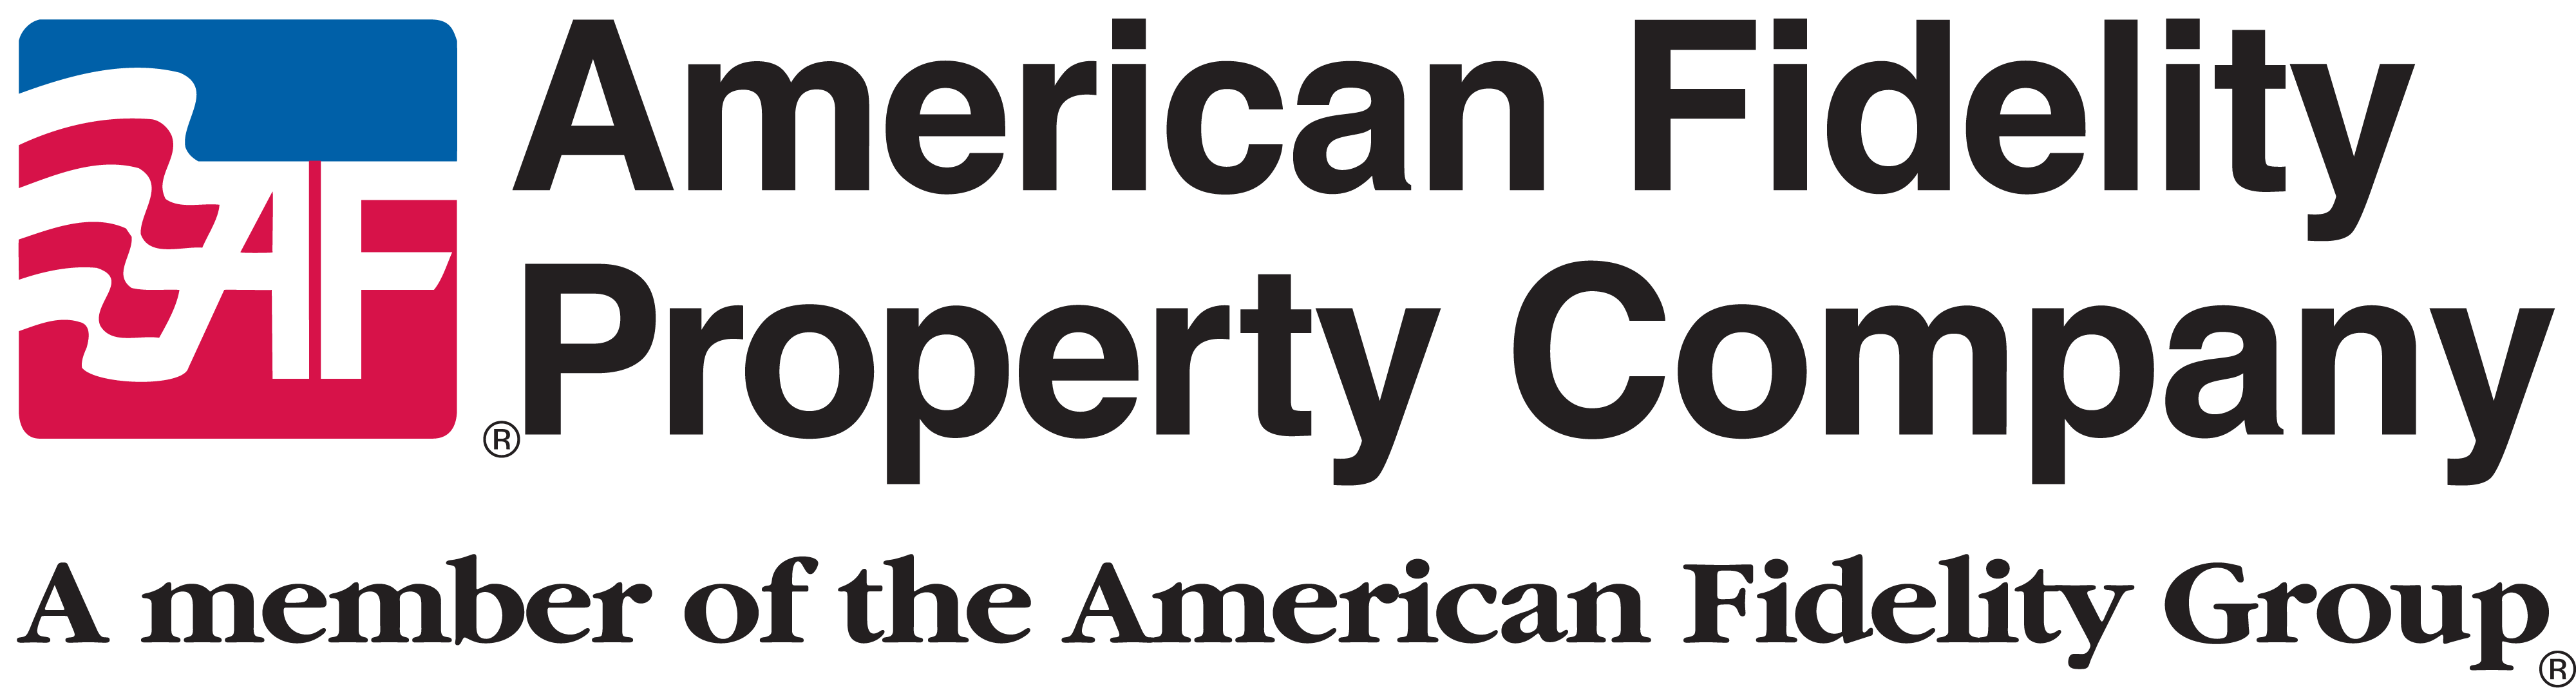 American Fidelity Property